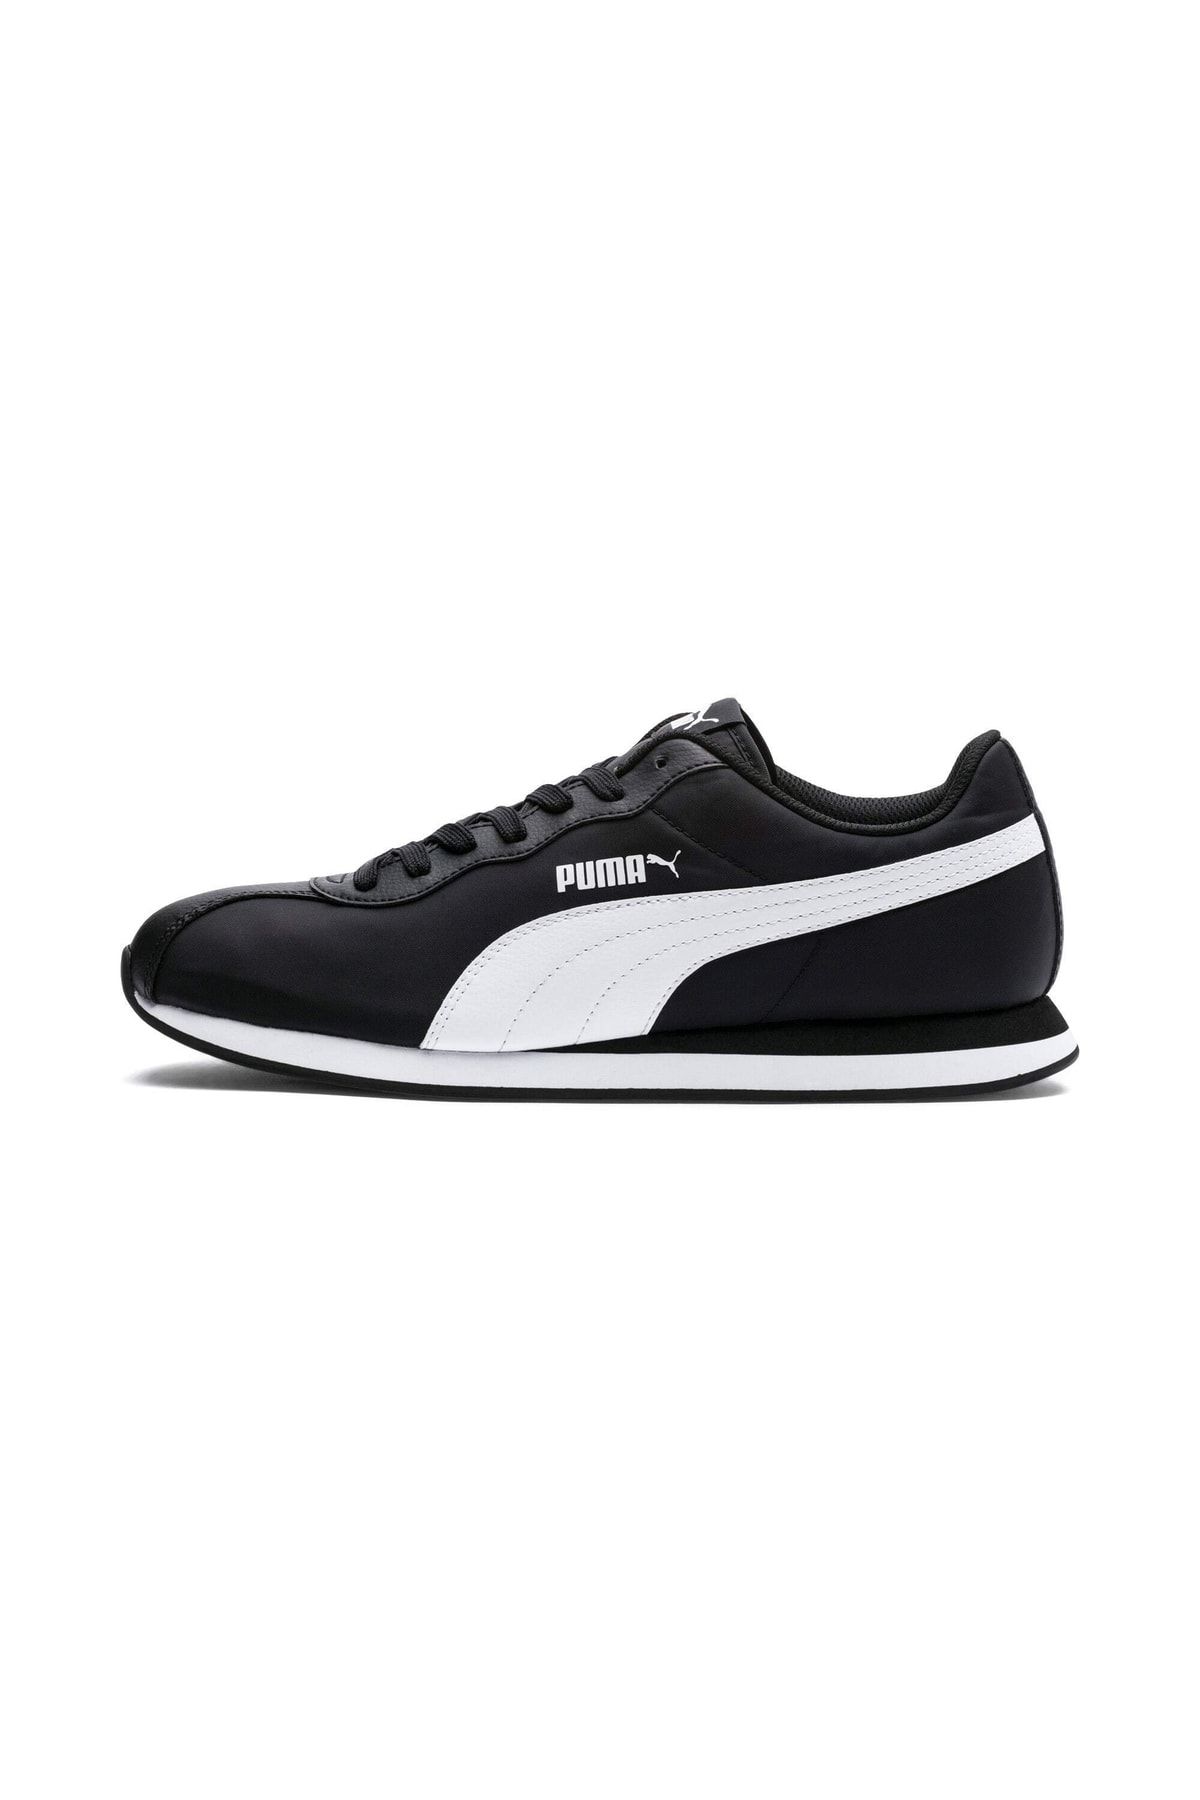 Puma TURIN II NL Siyah Unisex Sneaker Ayakkabı 100415210